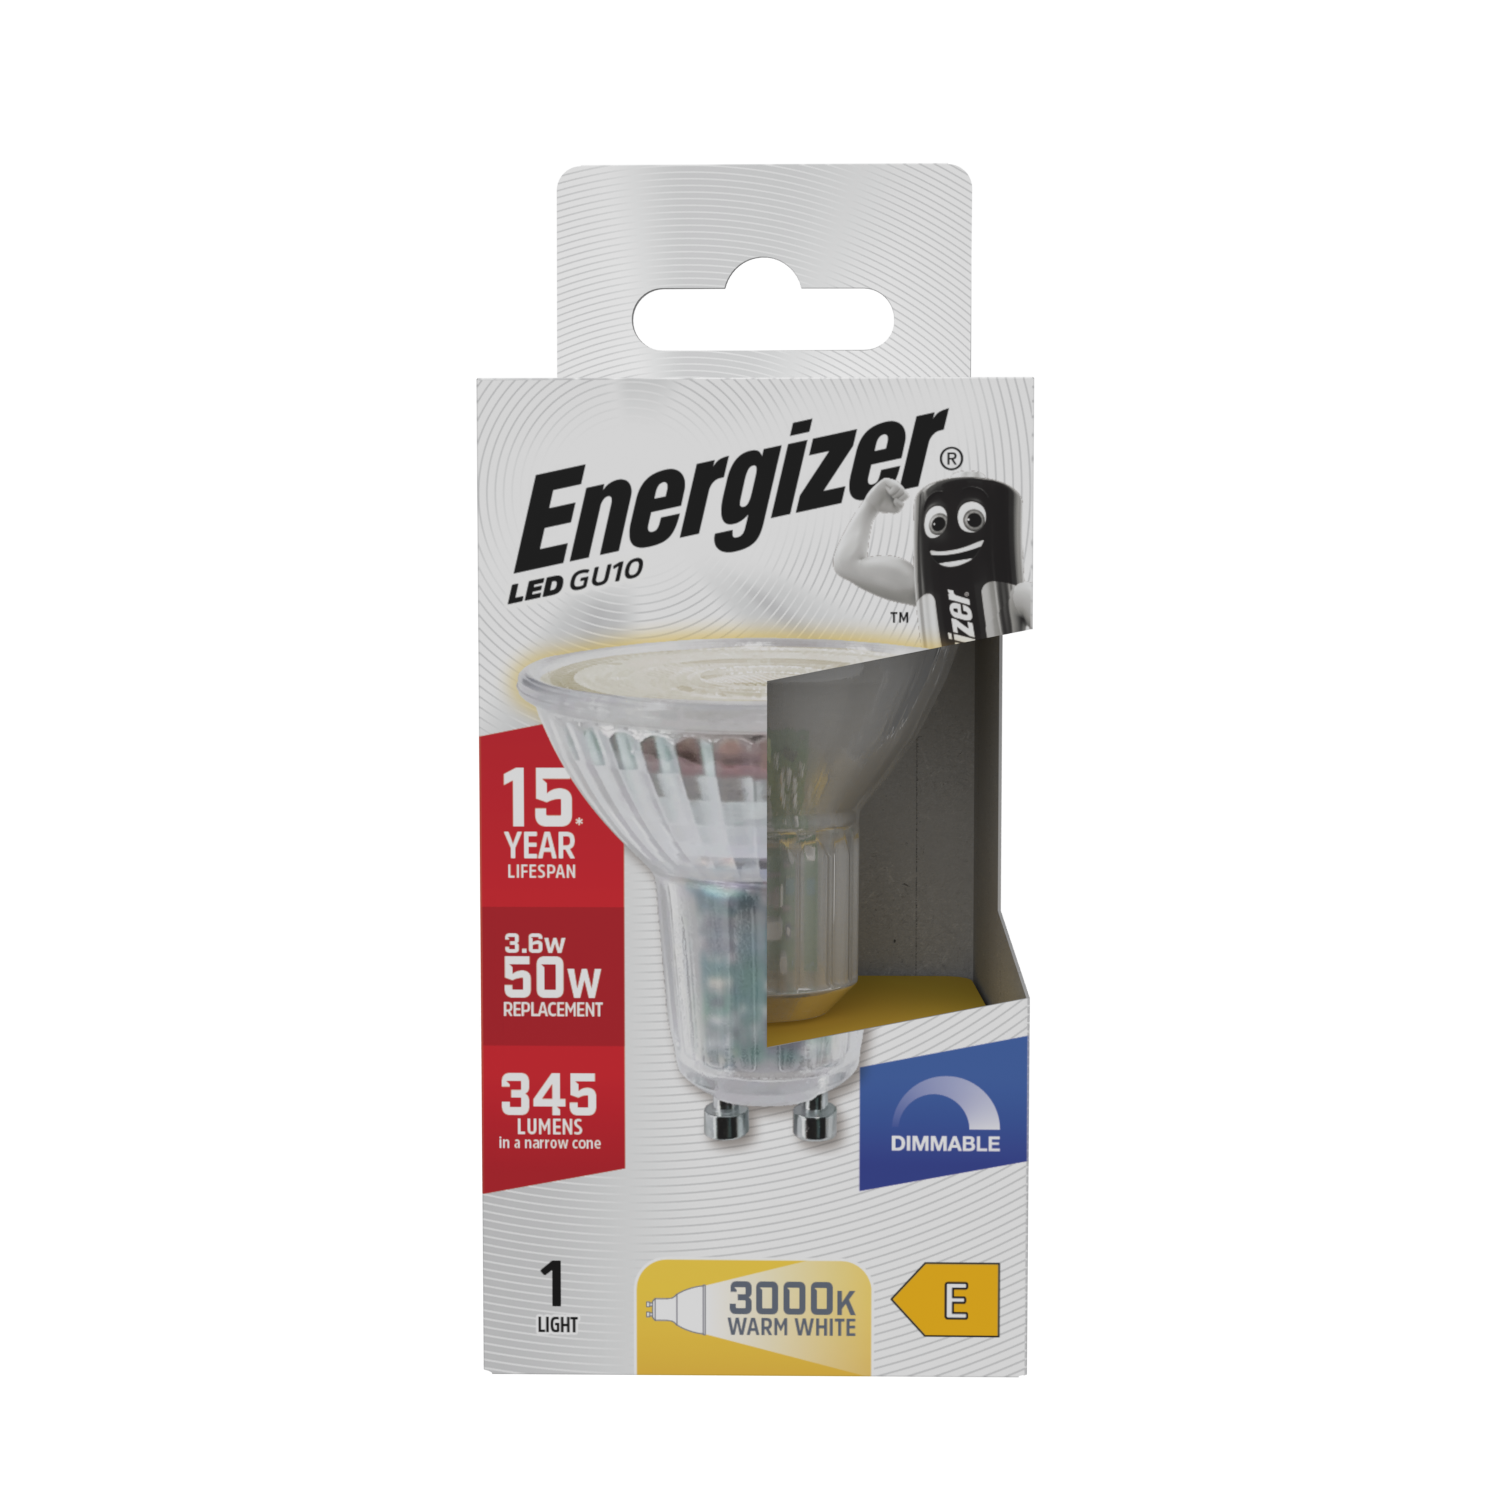 Energizer LED GU10 345 Lumens 3.6W 3,000K (Warm White) Dimmable, Box of 1